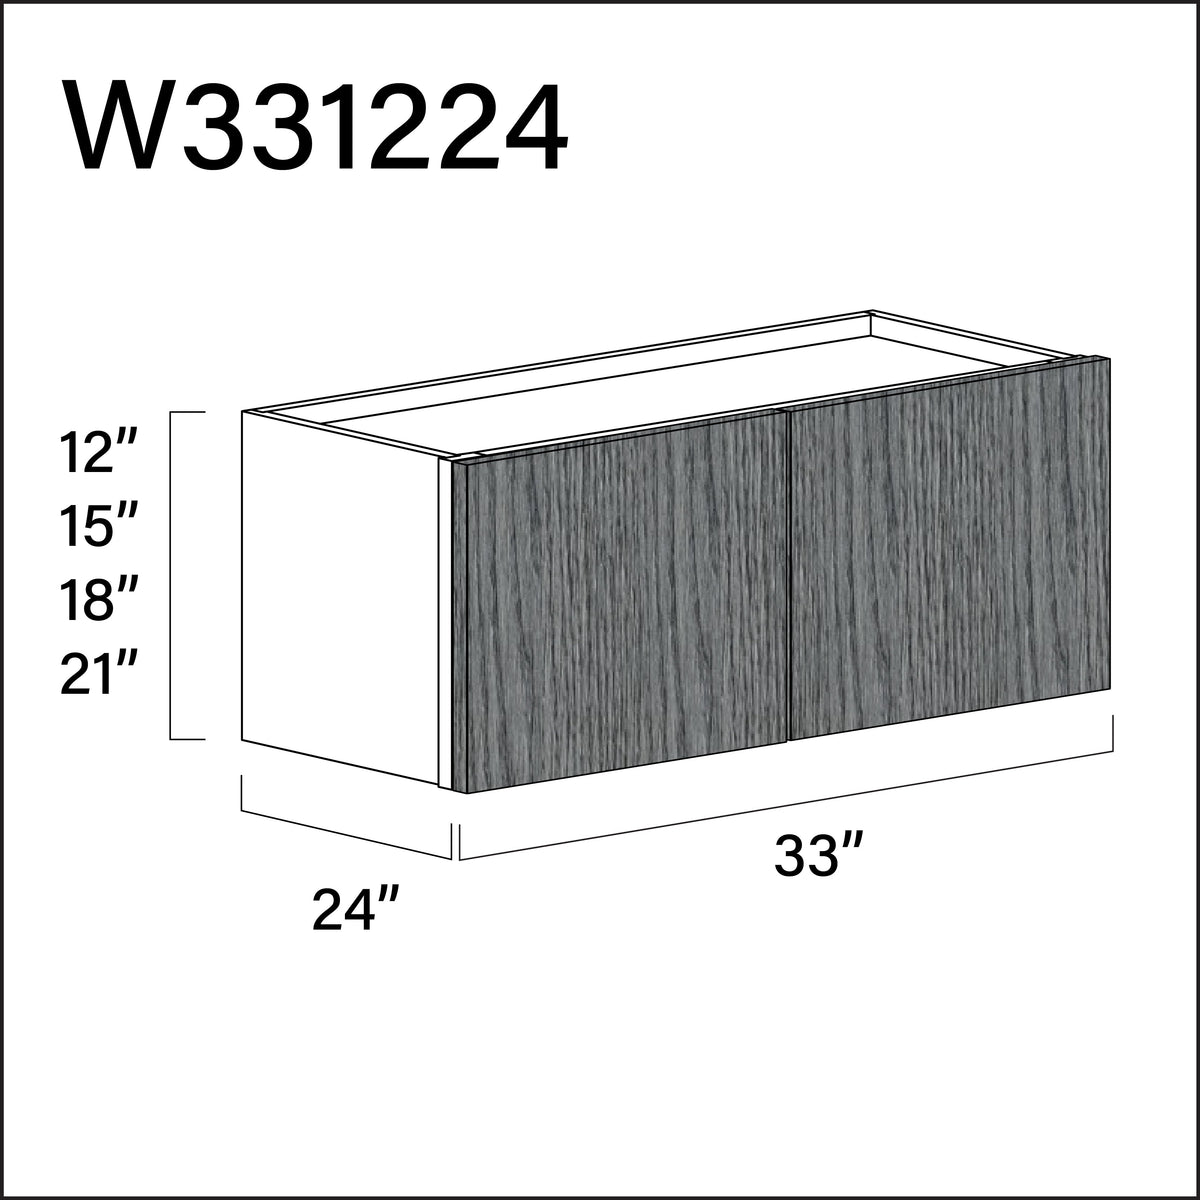 Textured Gray Frameless Wall Bridge Double Door Cabinet - 33" W x 12" H x 24" D